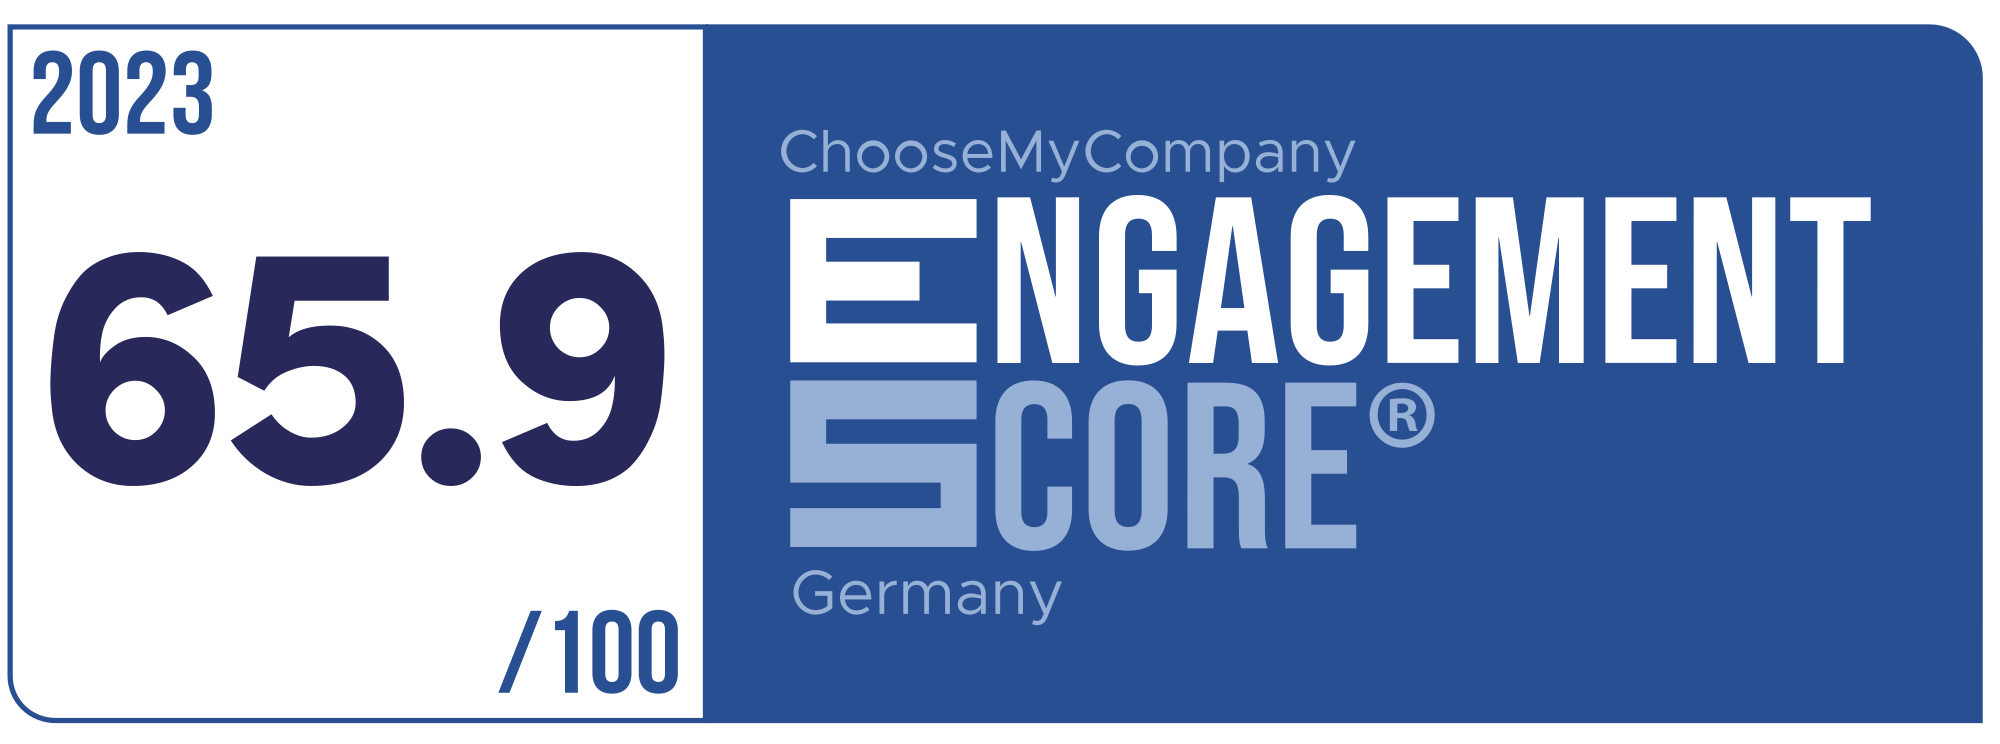 Label Engagement Score 2023 Germany